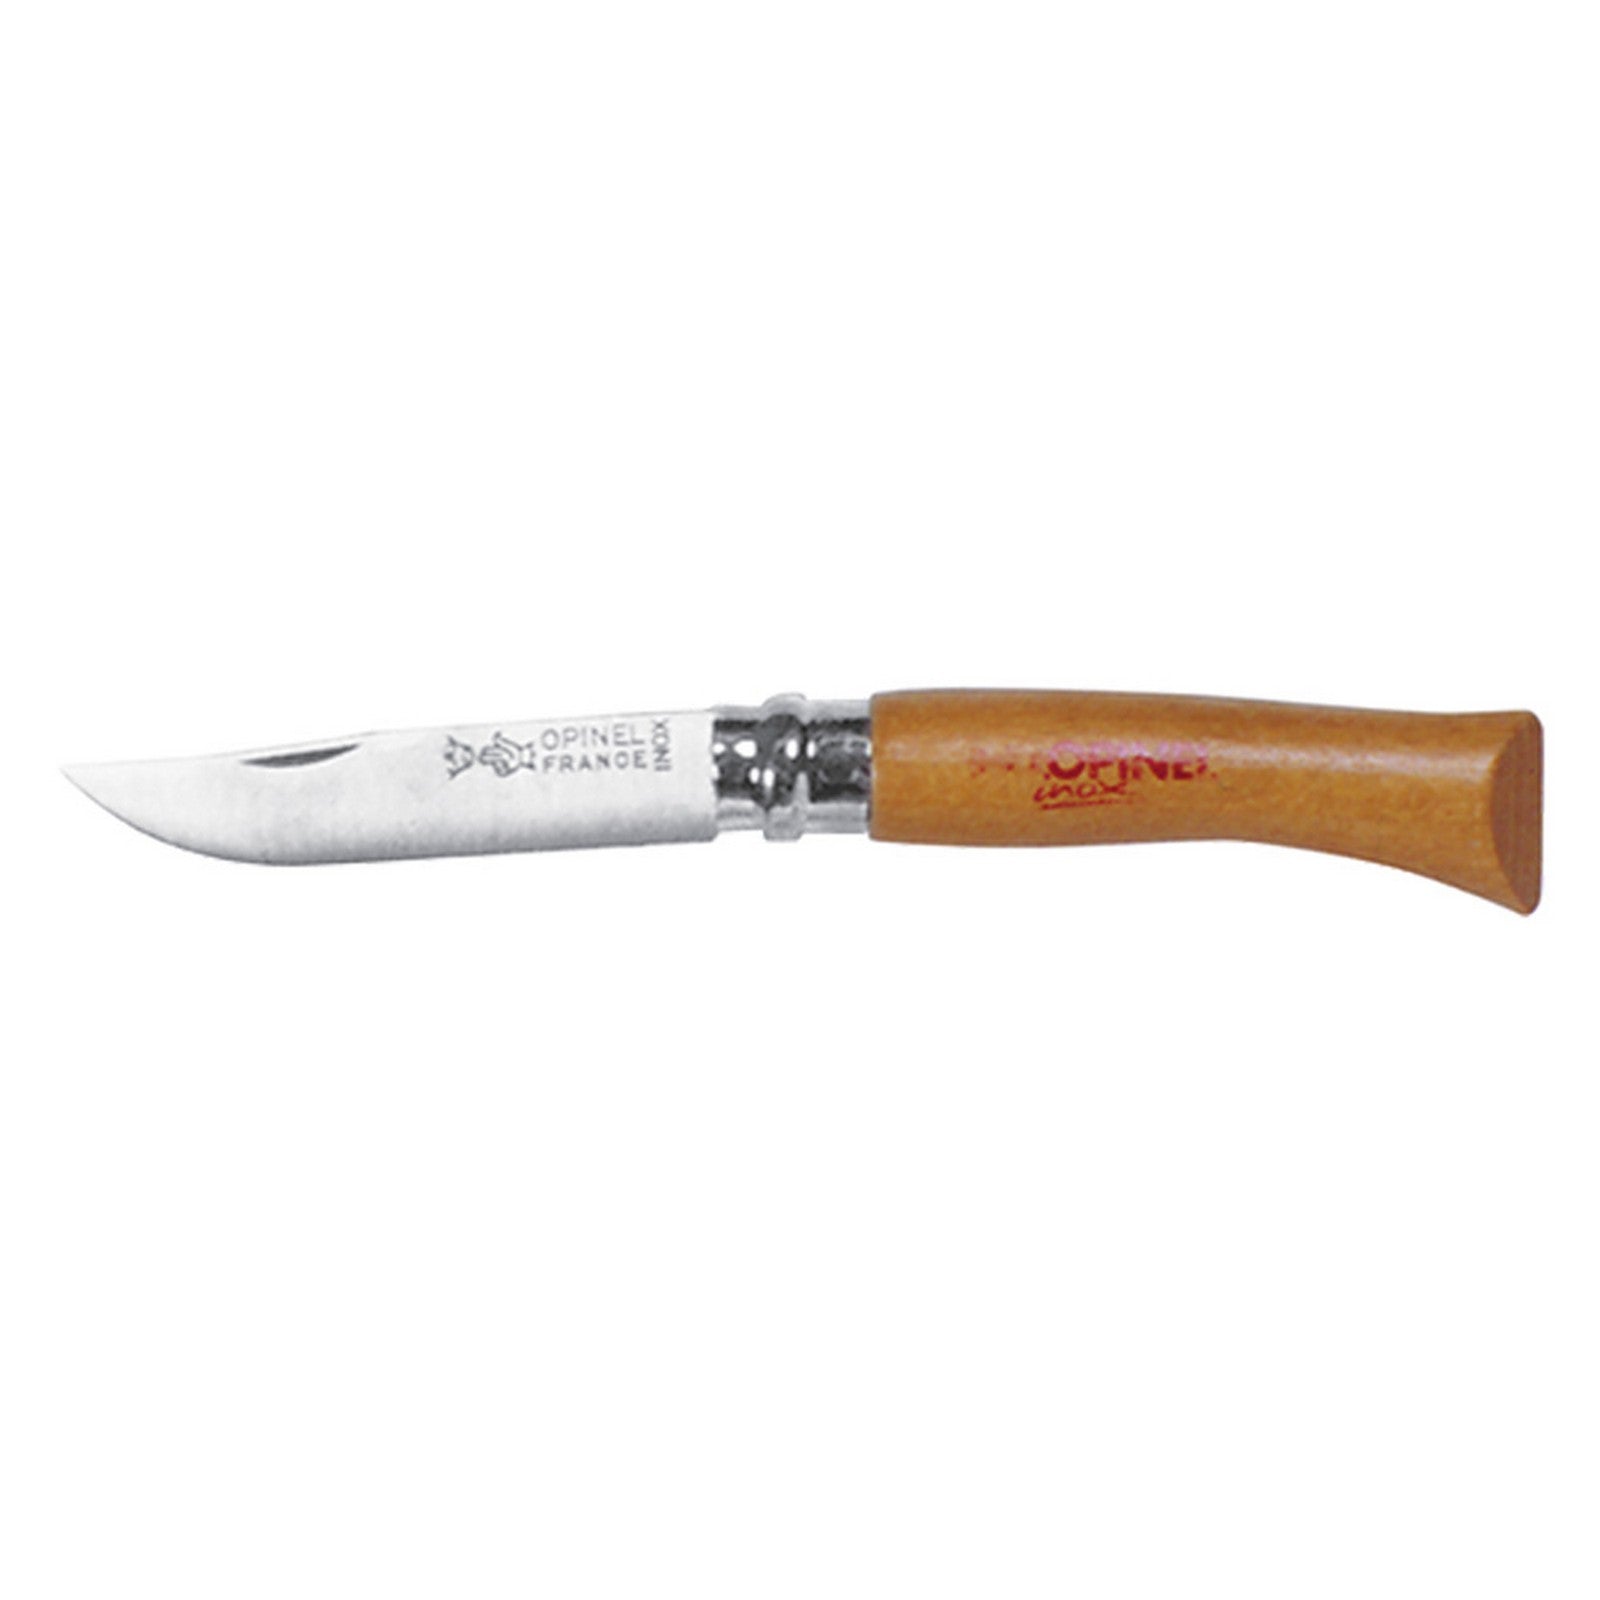 1blister coltello 'vri' vri 7 - lama mm 80 (blister) cod:ferx.802253nlm